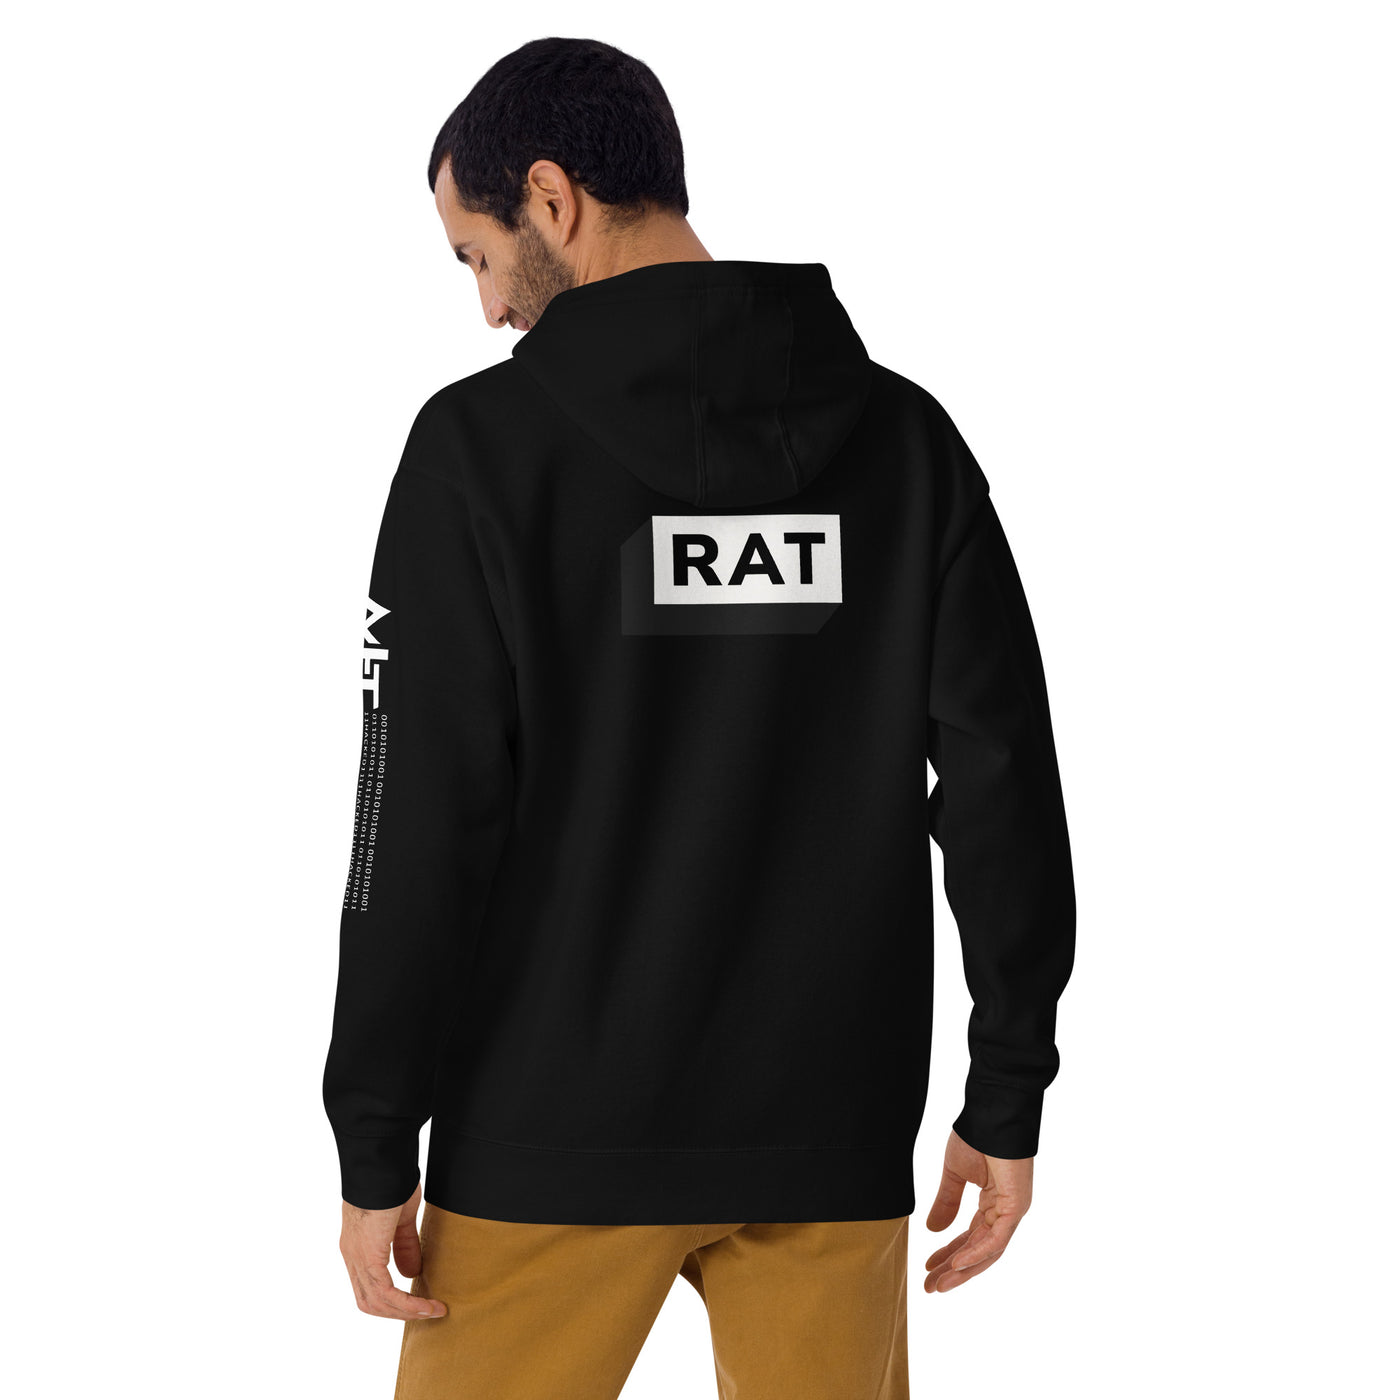 RAT (Remote Access Trojan ) - Unisex Hoodie (back print)